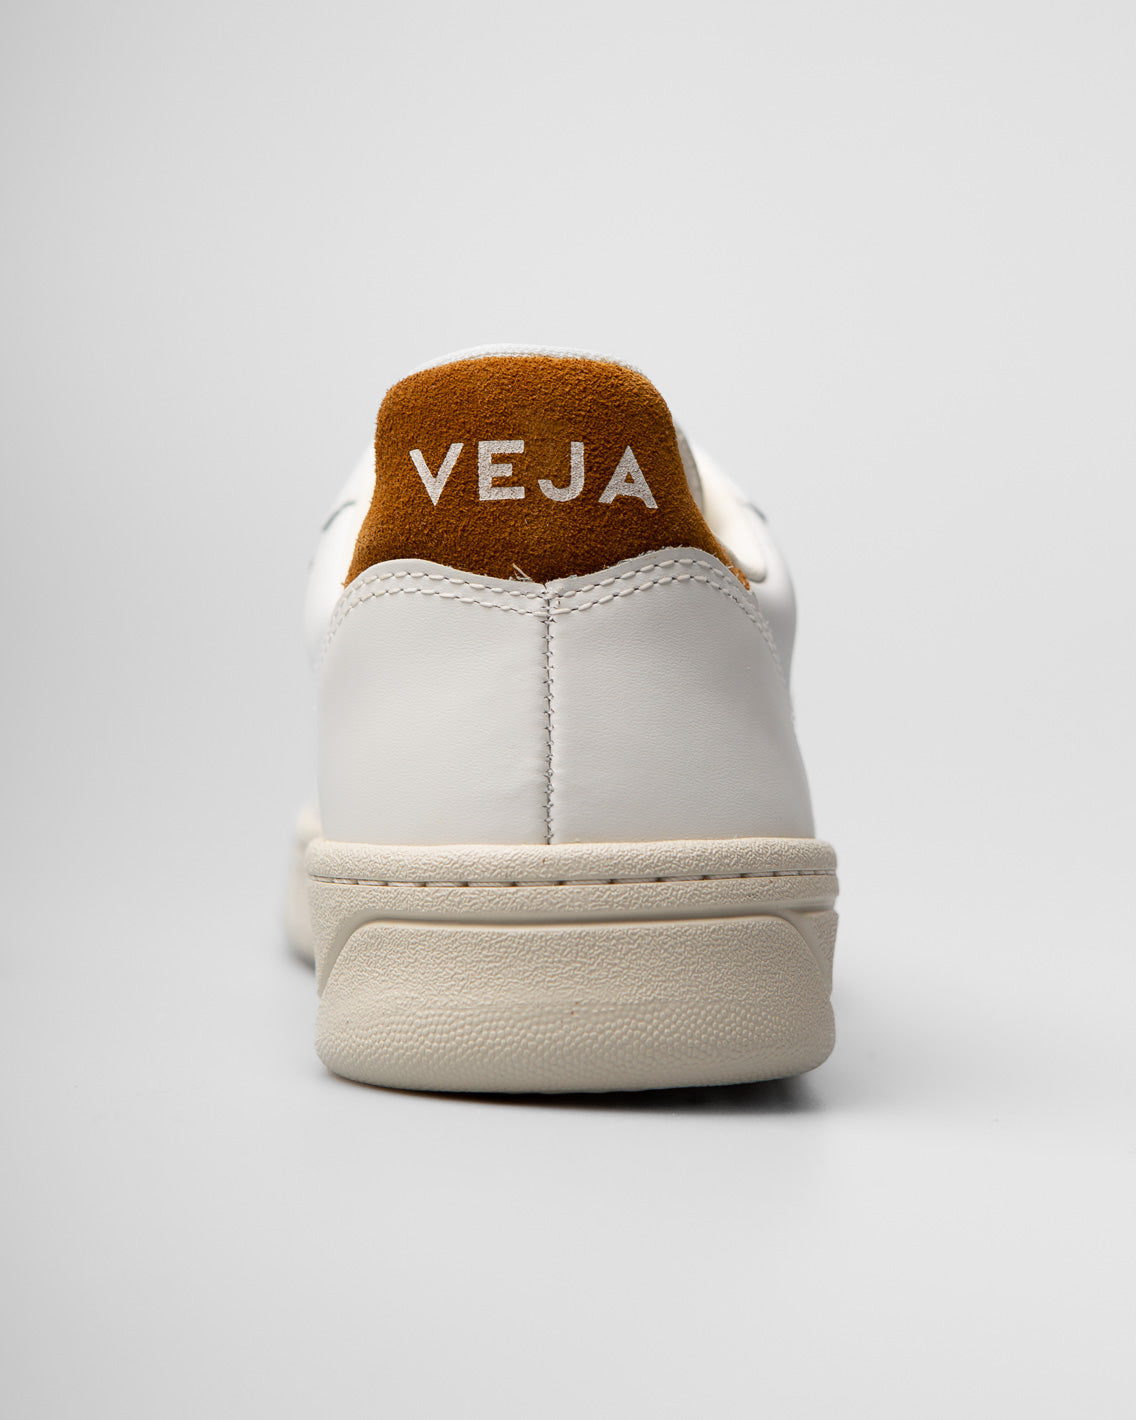 Veja - V-10 Leather  - Extra White / Camel